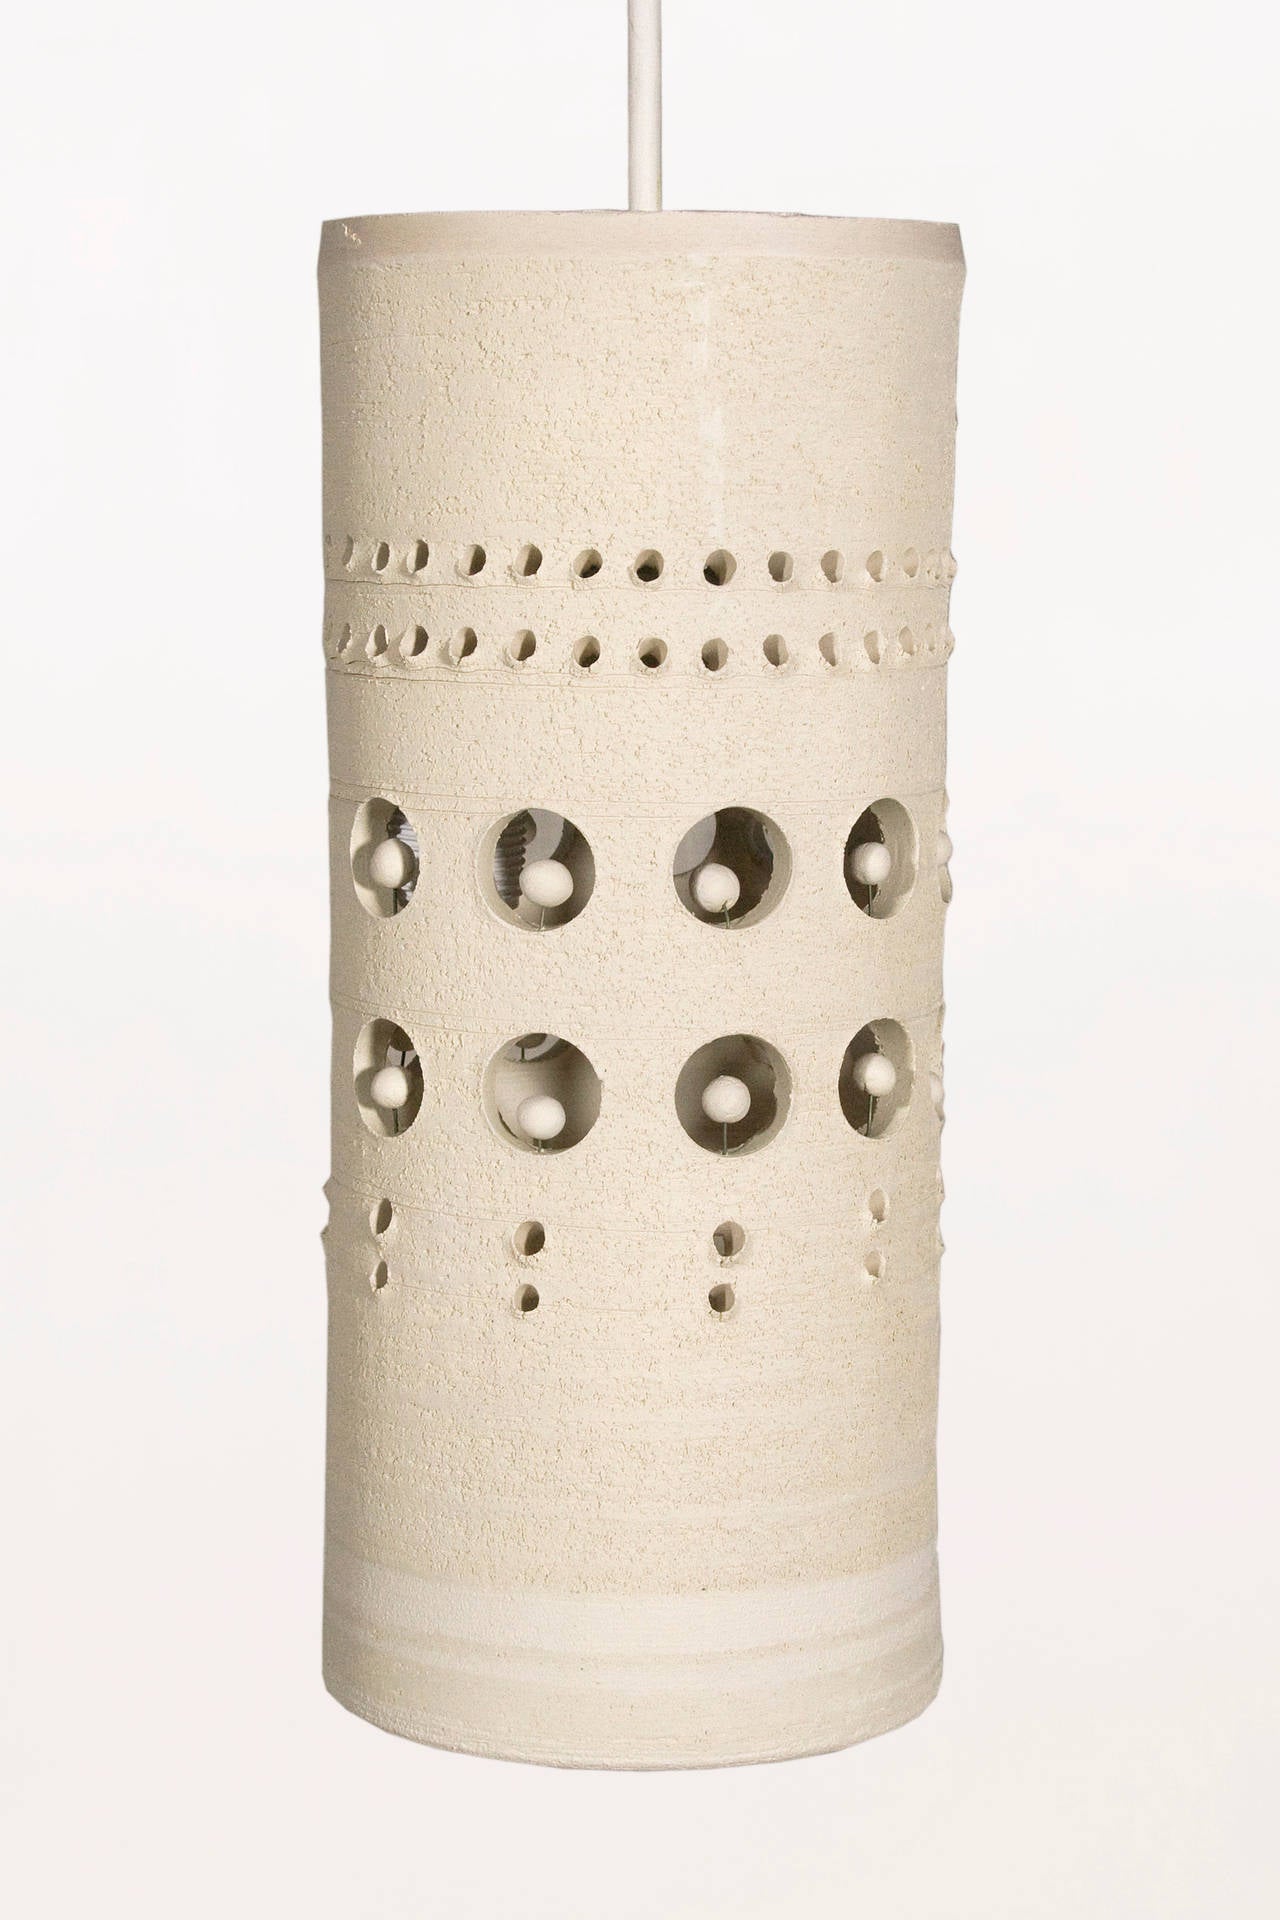 Organic Modern Georges Pelletier Ceramic Chandelier, France, circa 1970